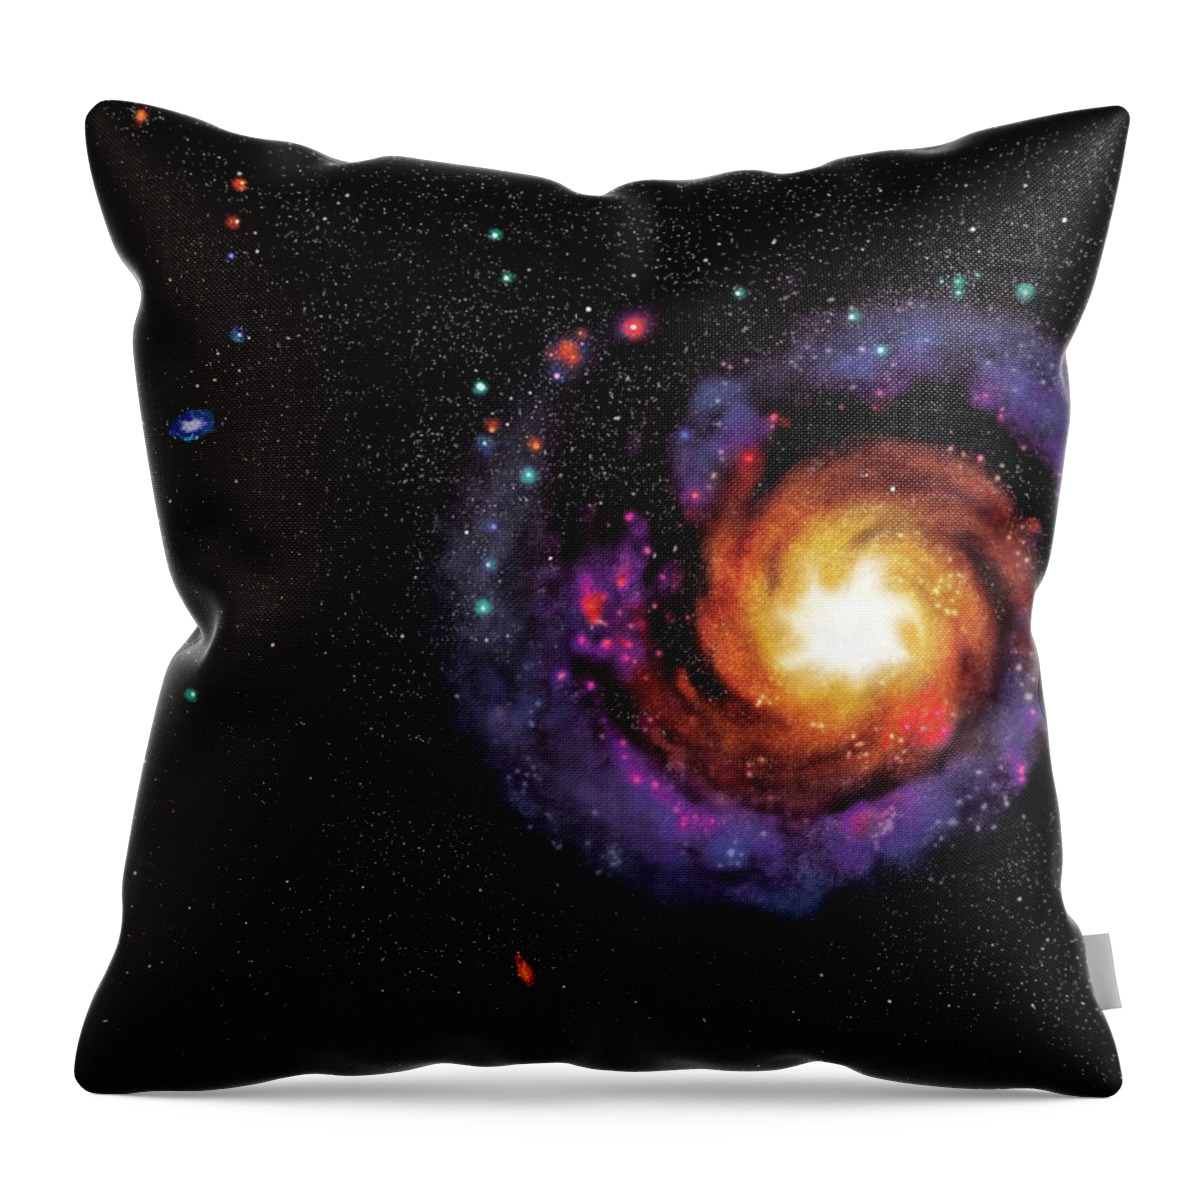 Black Color Throw Pillow featuring the photograph Dancing Galaxy by Lunanaranja